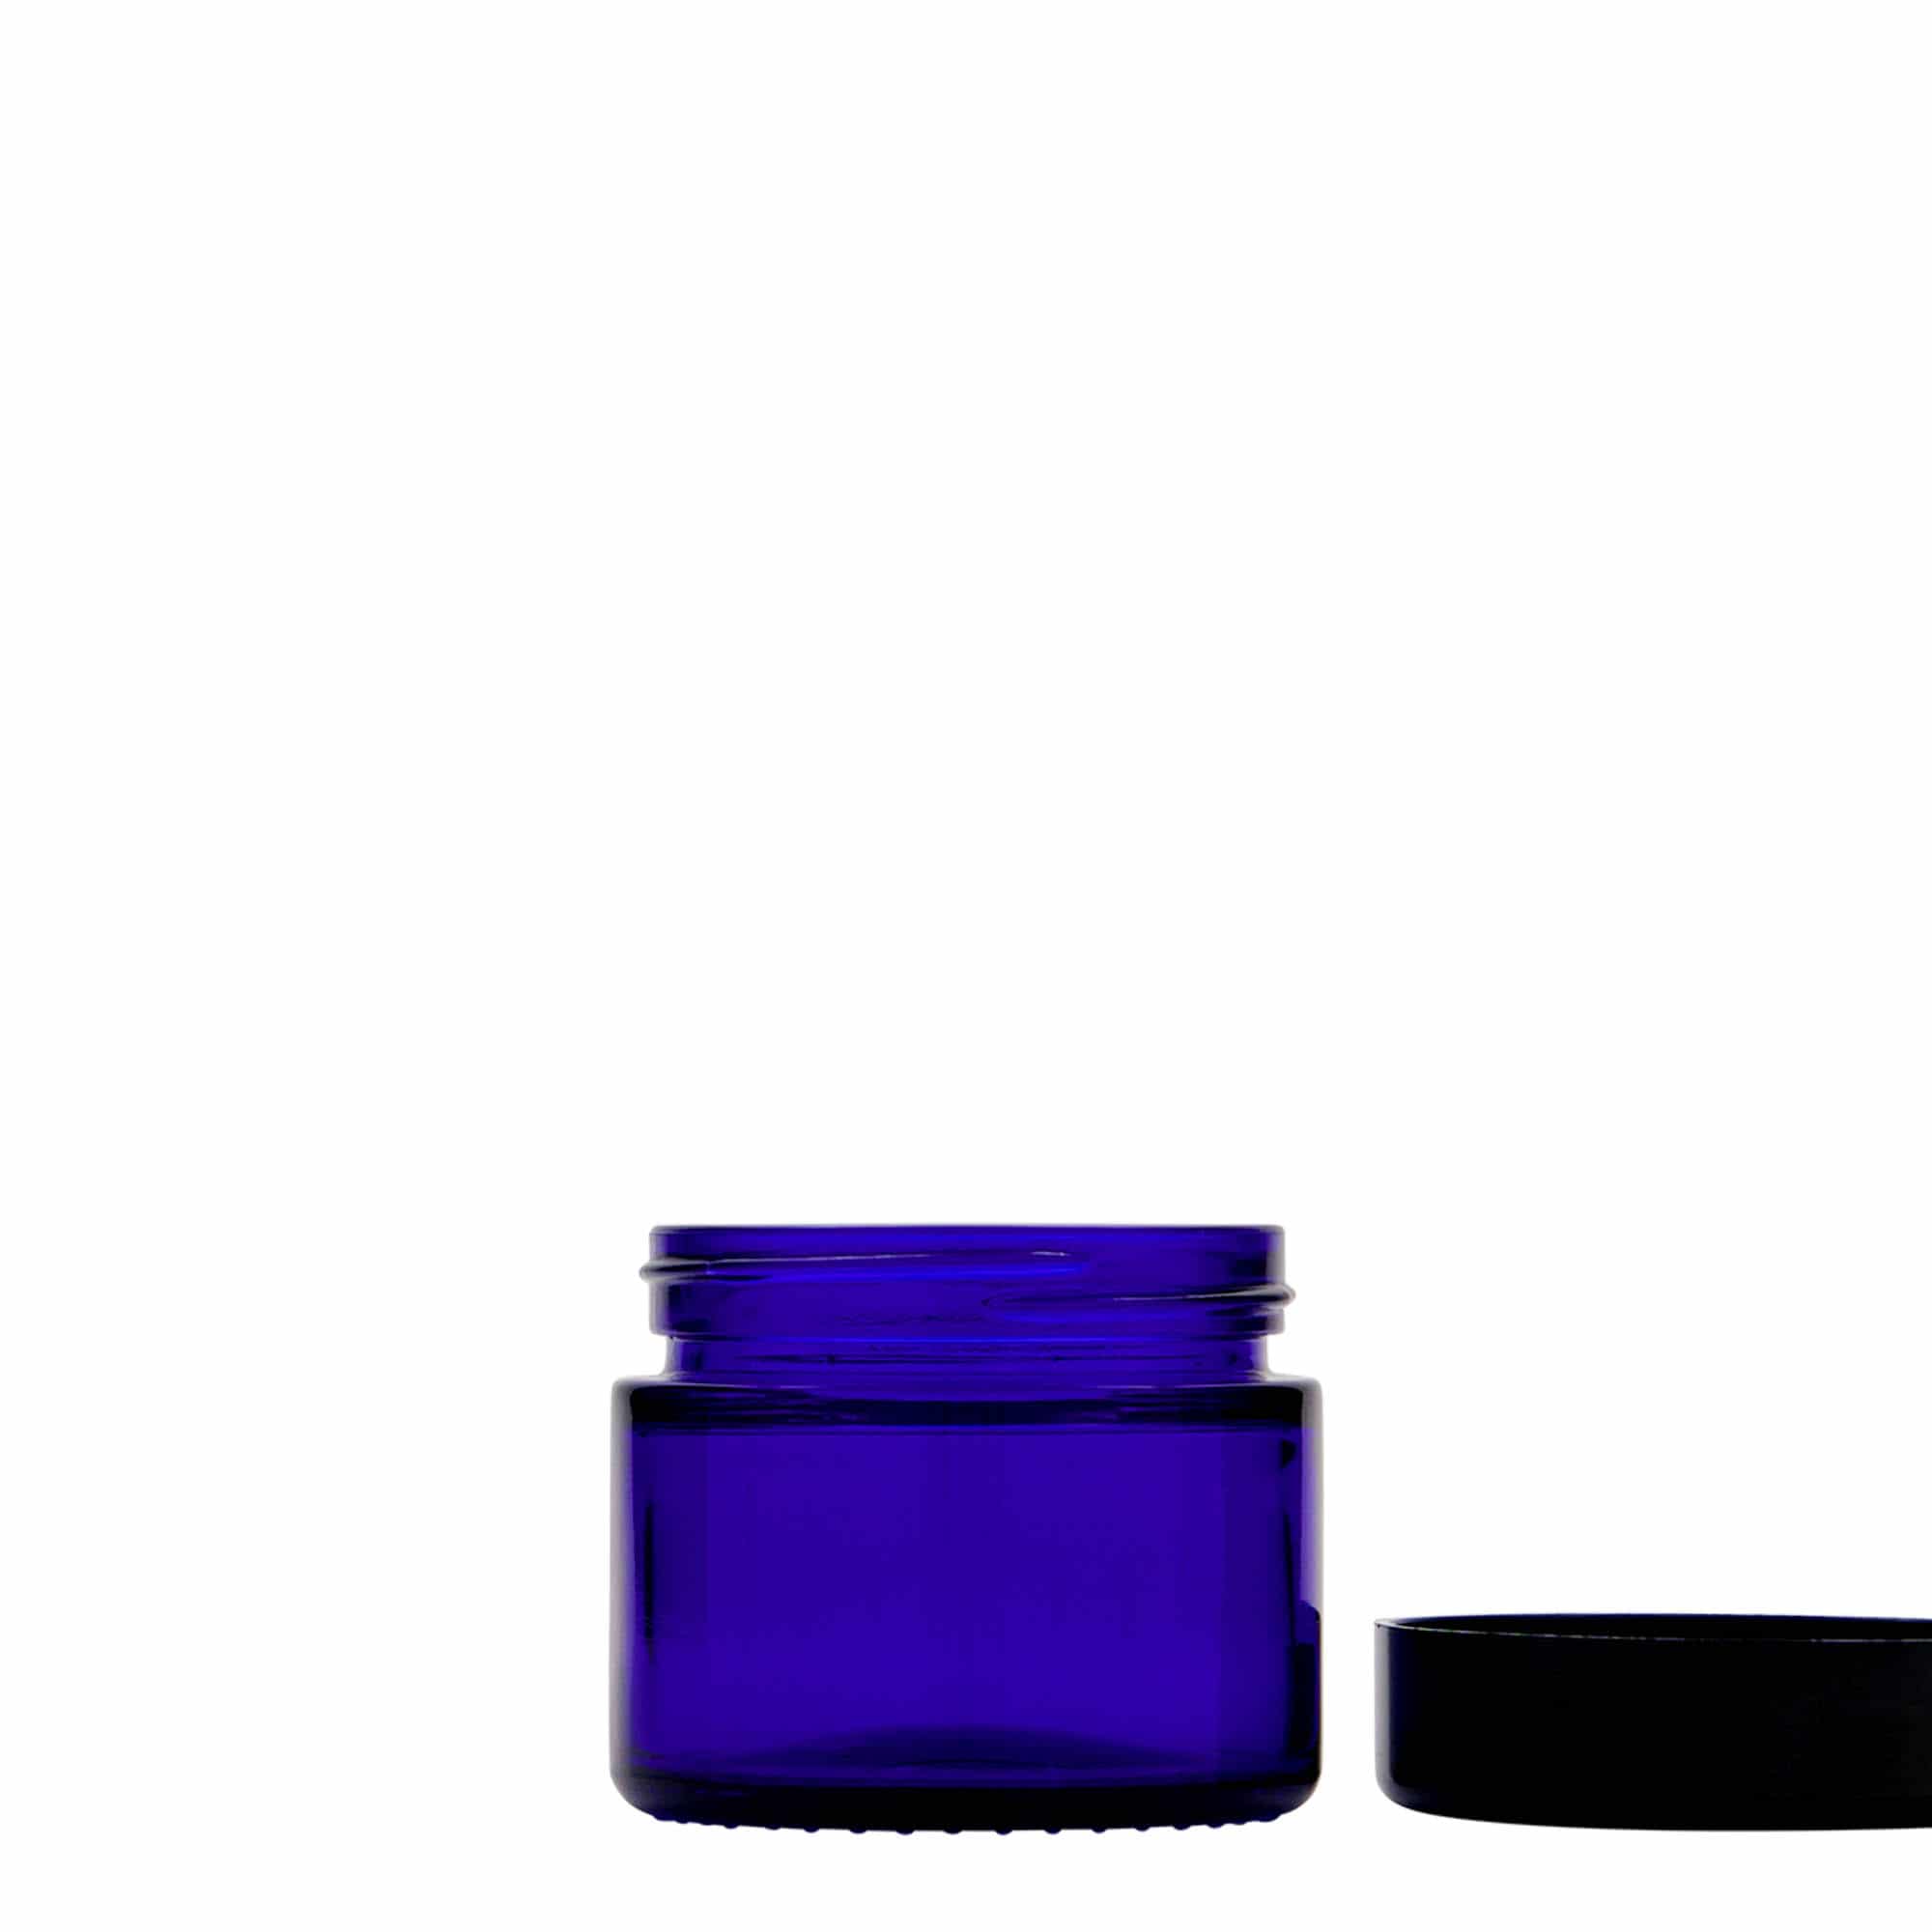 50 ml cosmetic jar 'Blue Edition', glass, royal blue, closure: screw cap